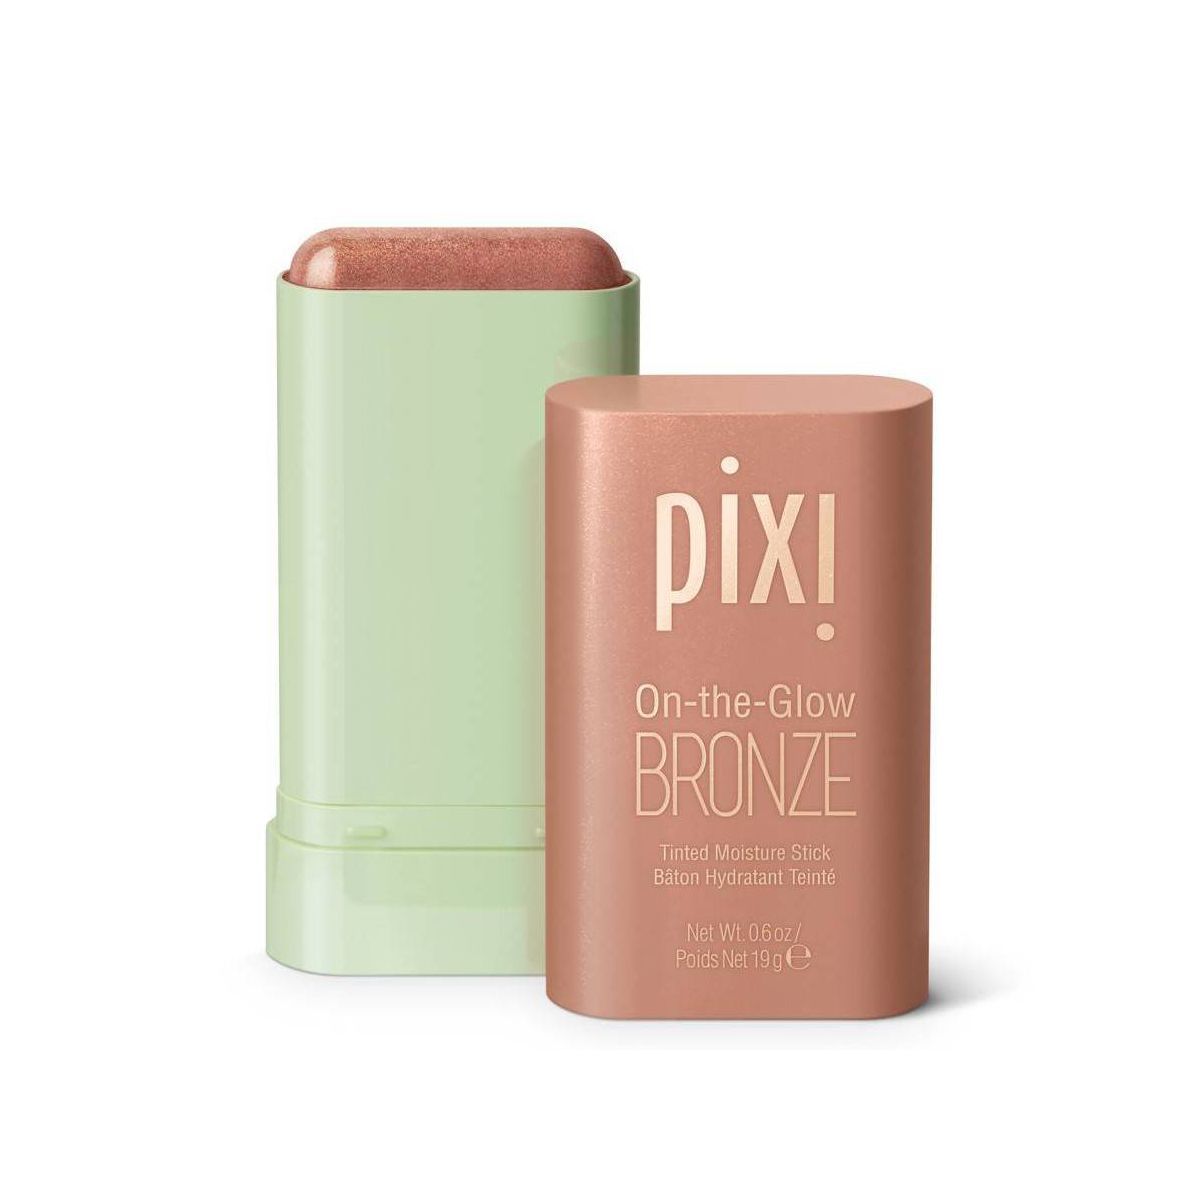 Pixi On The Glow Bronze Tinted Moisturizer Stick Bronzer - 0.67oz | Target